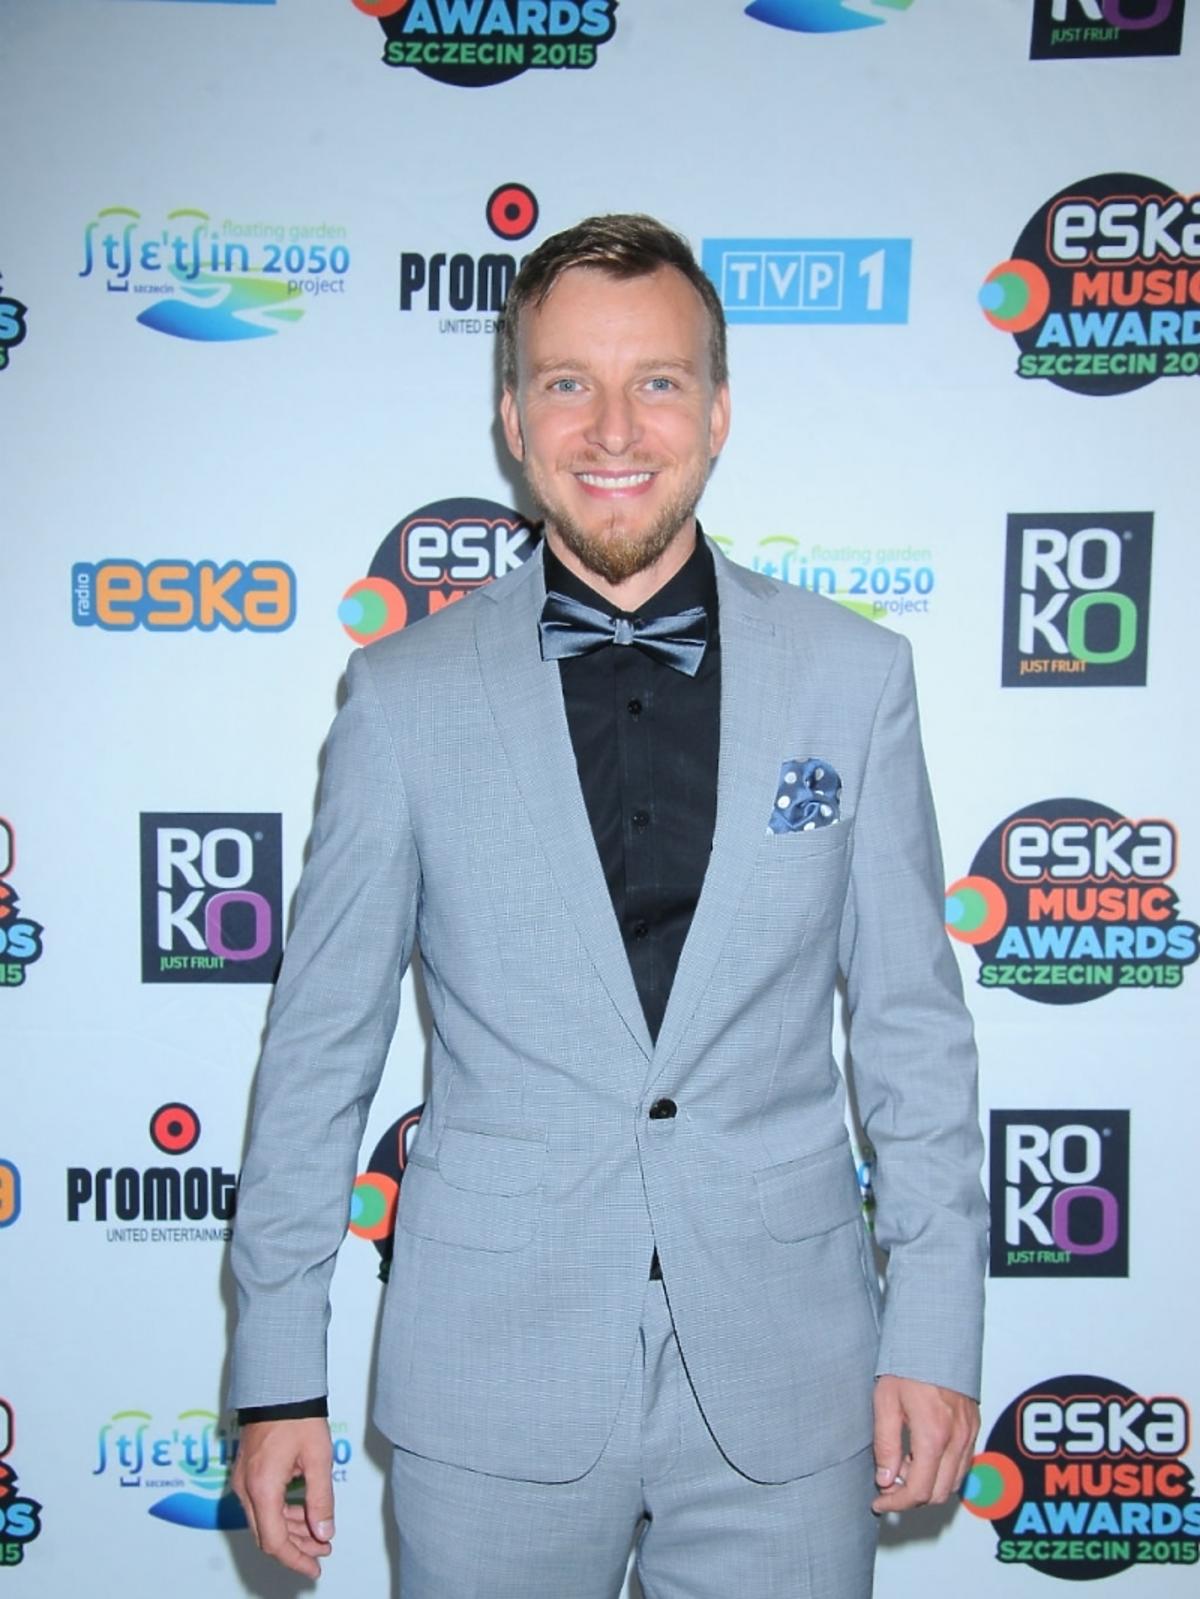 Eska Music Awards 2015 - Piotr Kupicha